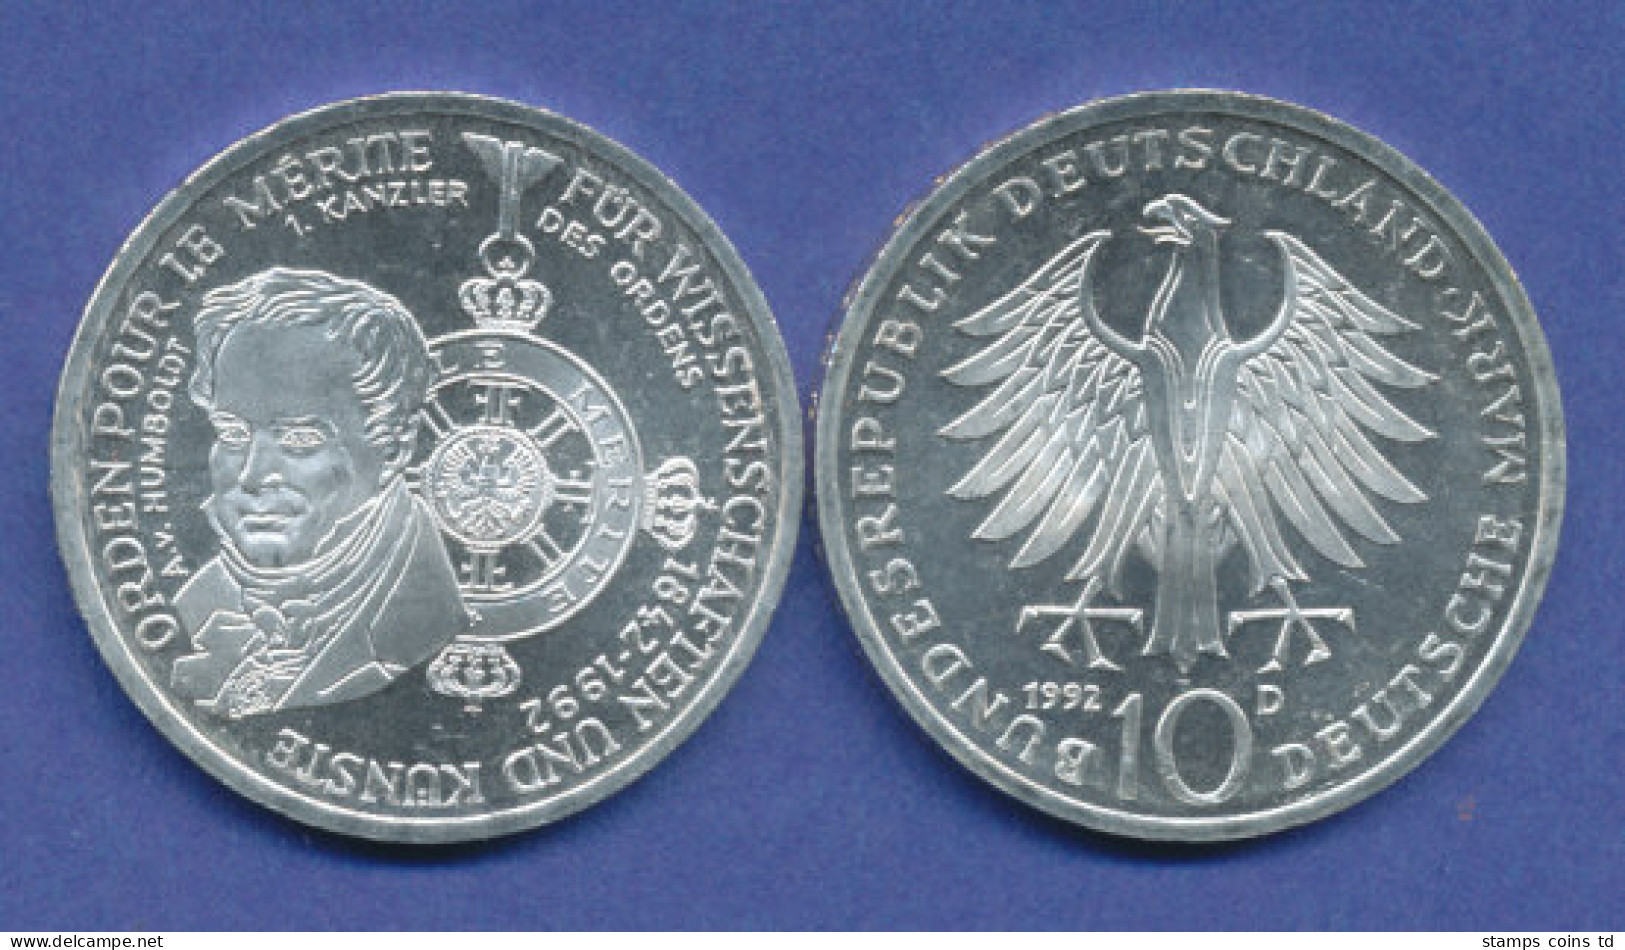 Bundesrepublik 10DM Silber-Gedenkmünze 1992, Orden Pour Le Mérite - 10 Mark